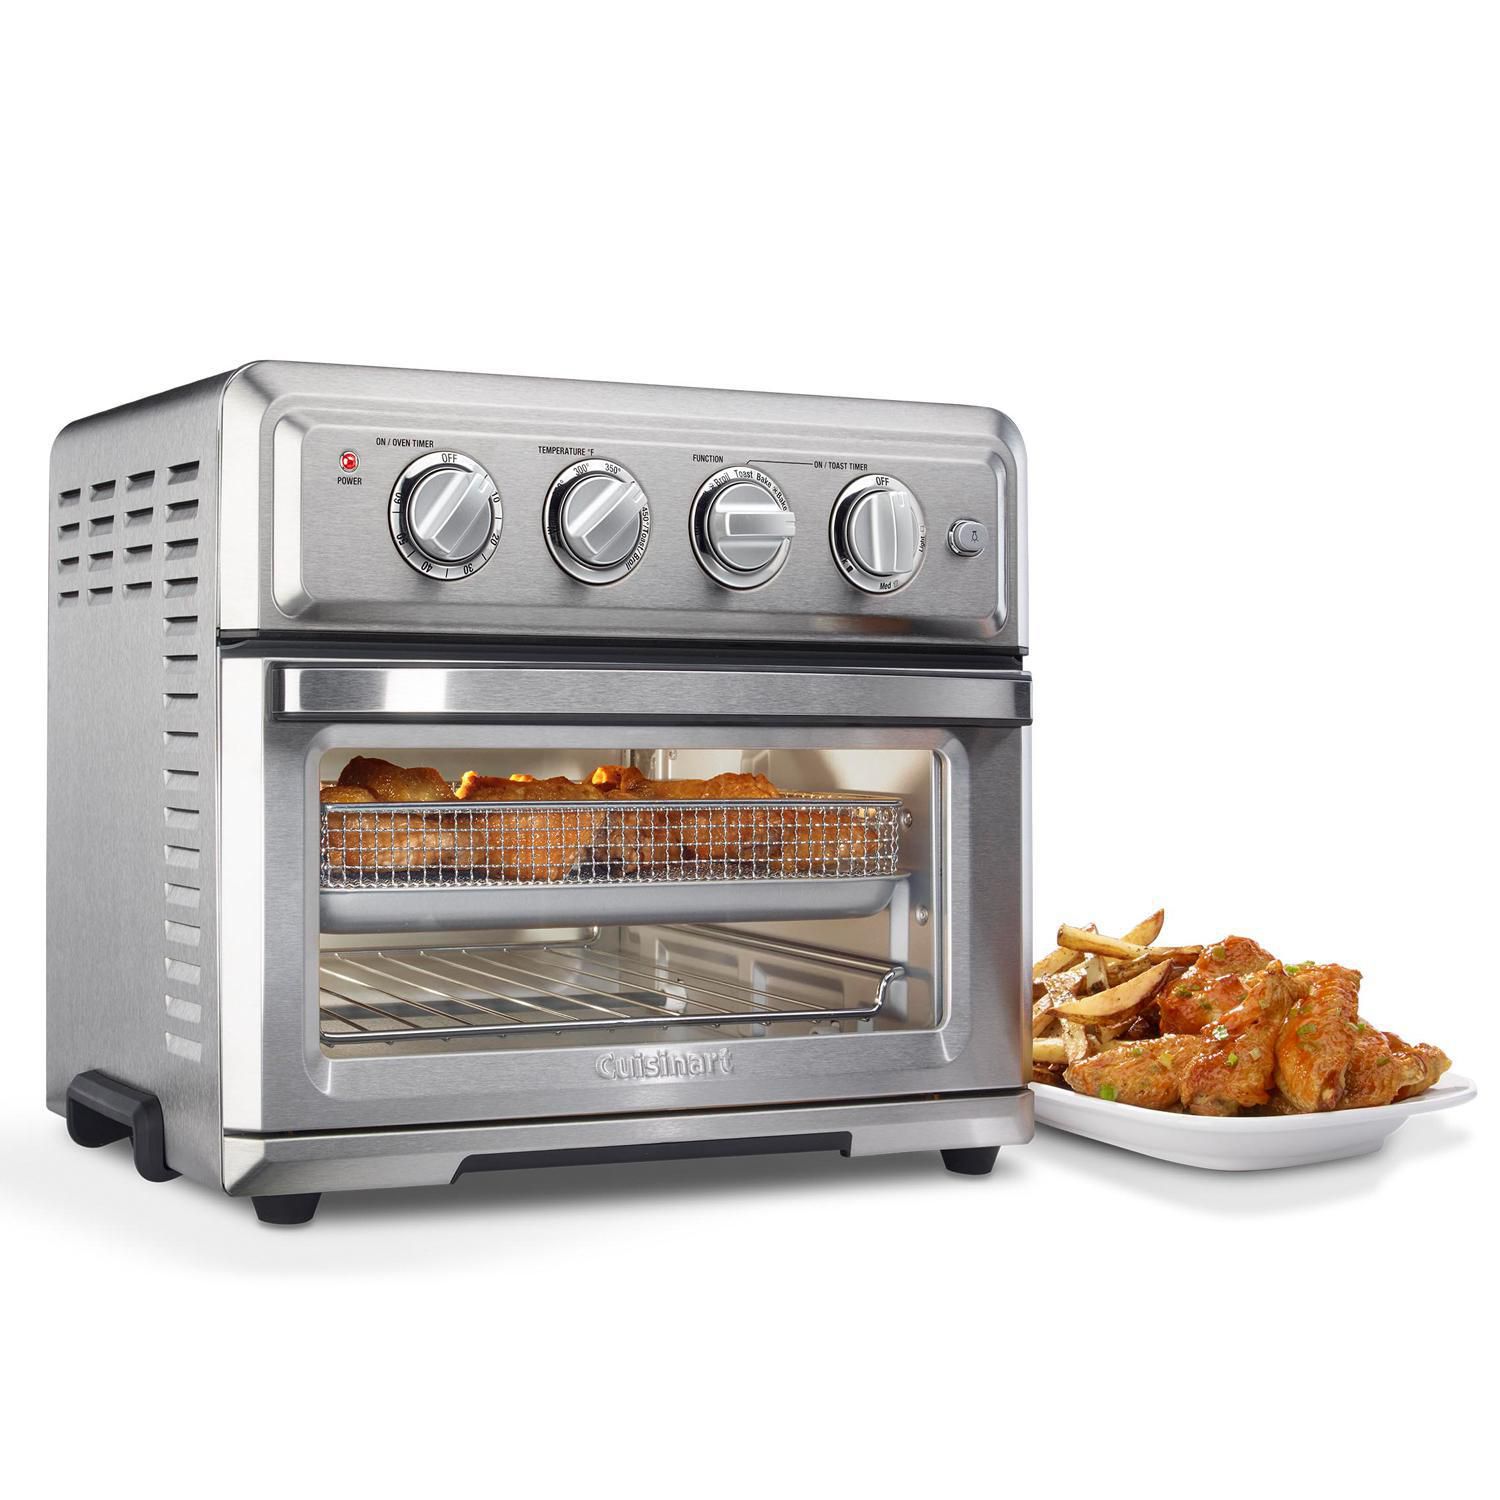 Cuisinart Air Fryer Convection Oven Toa 60c Walmart Canada